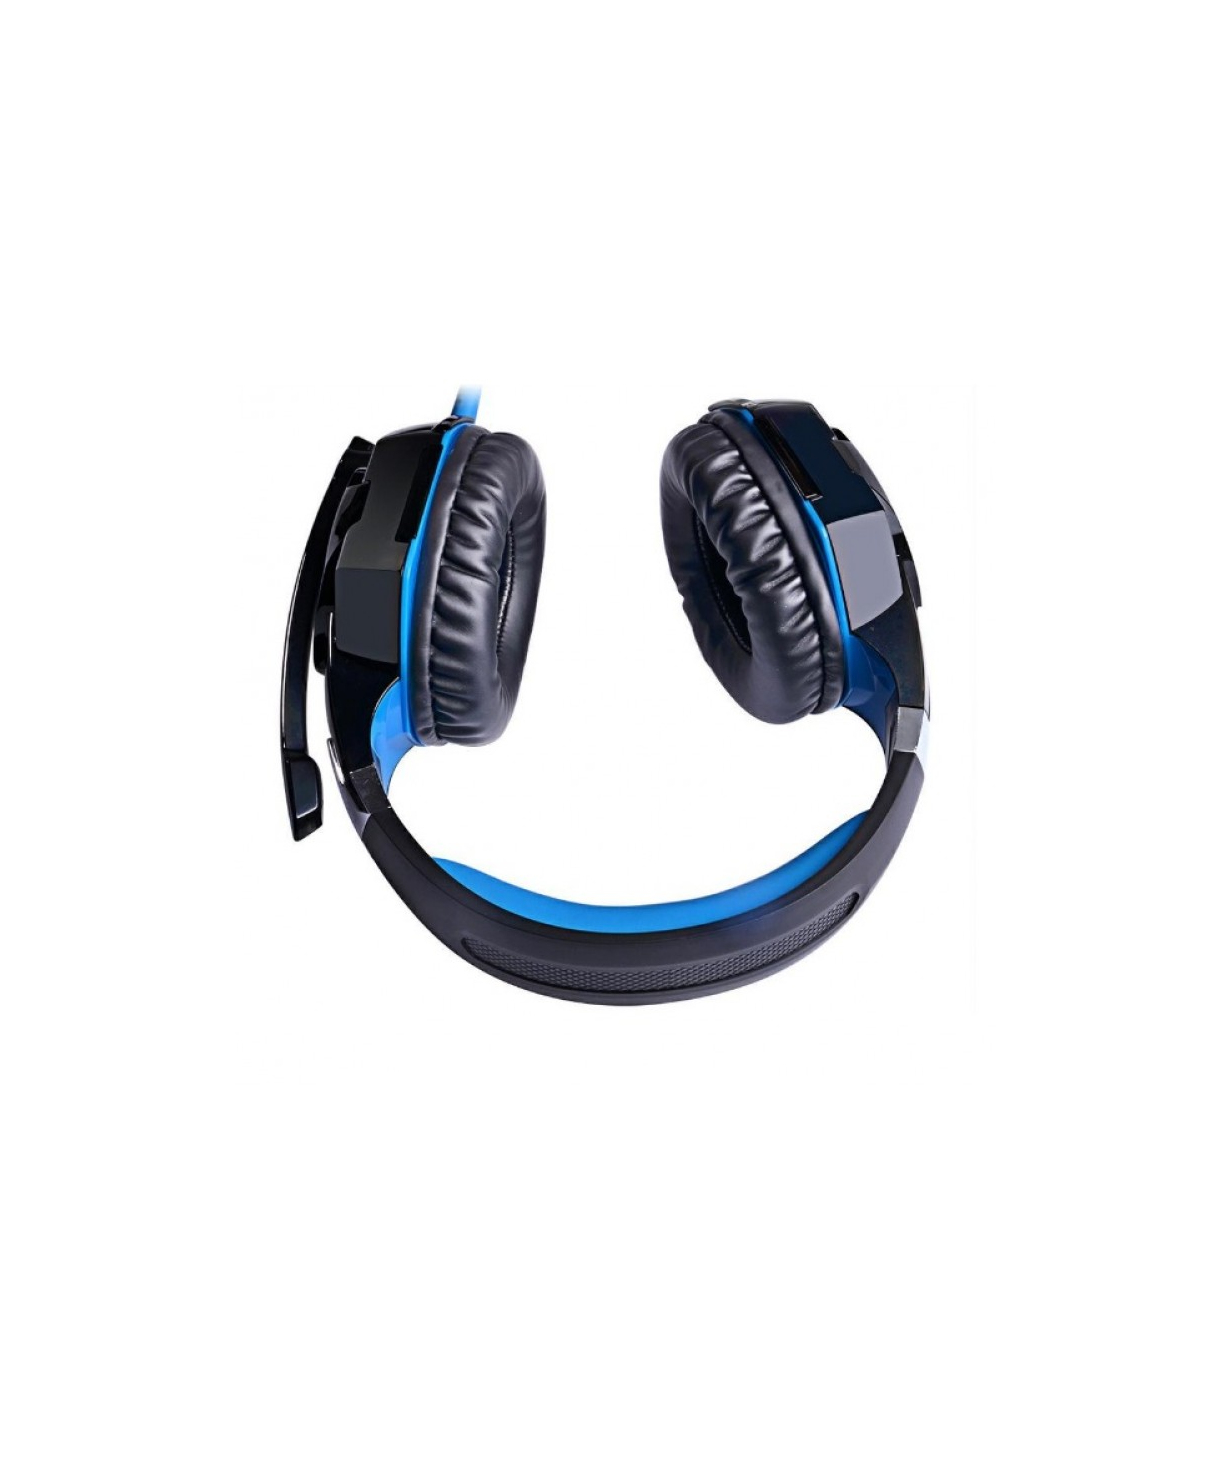 Headphones `KOTION EACH` gaming G2000 PRO